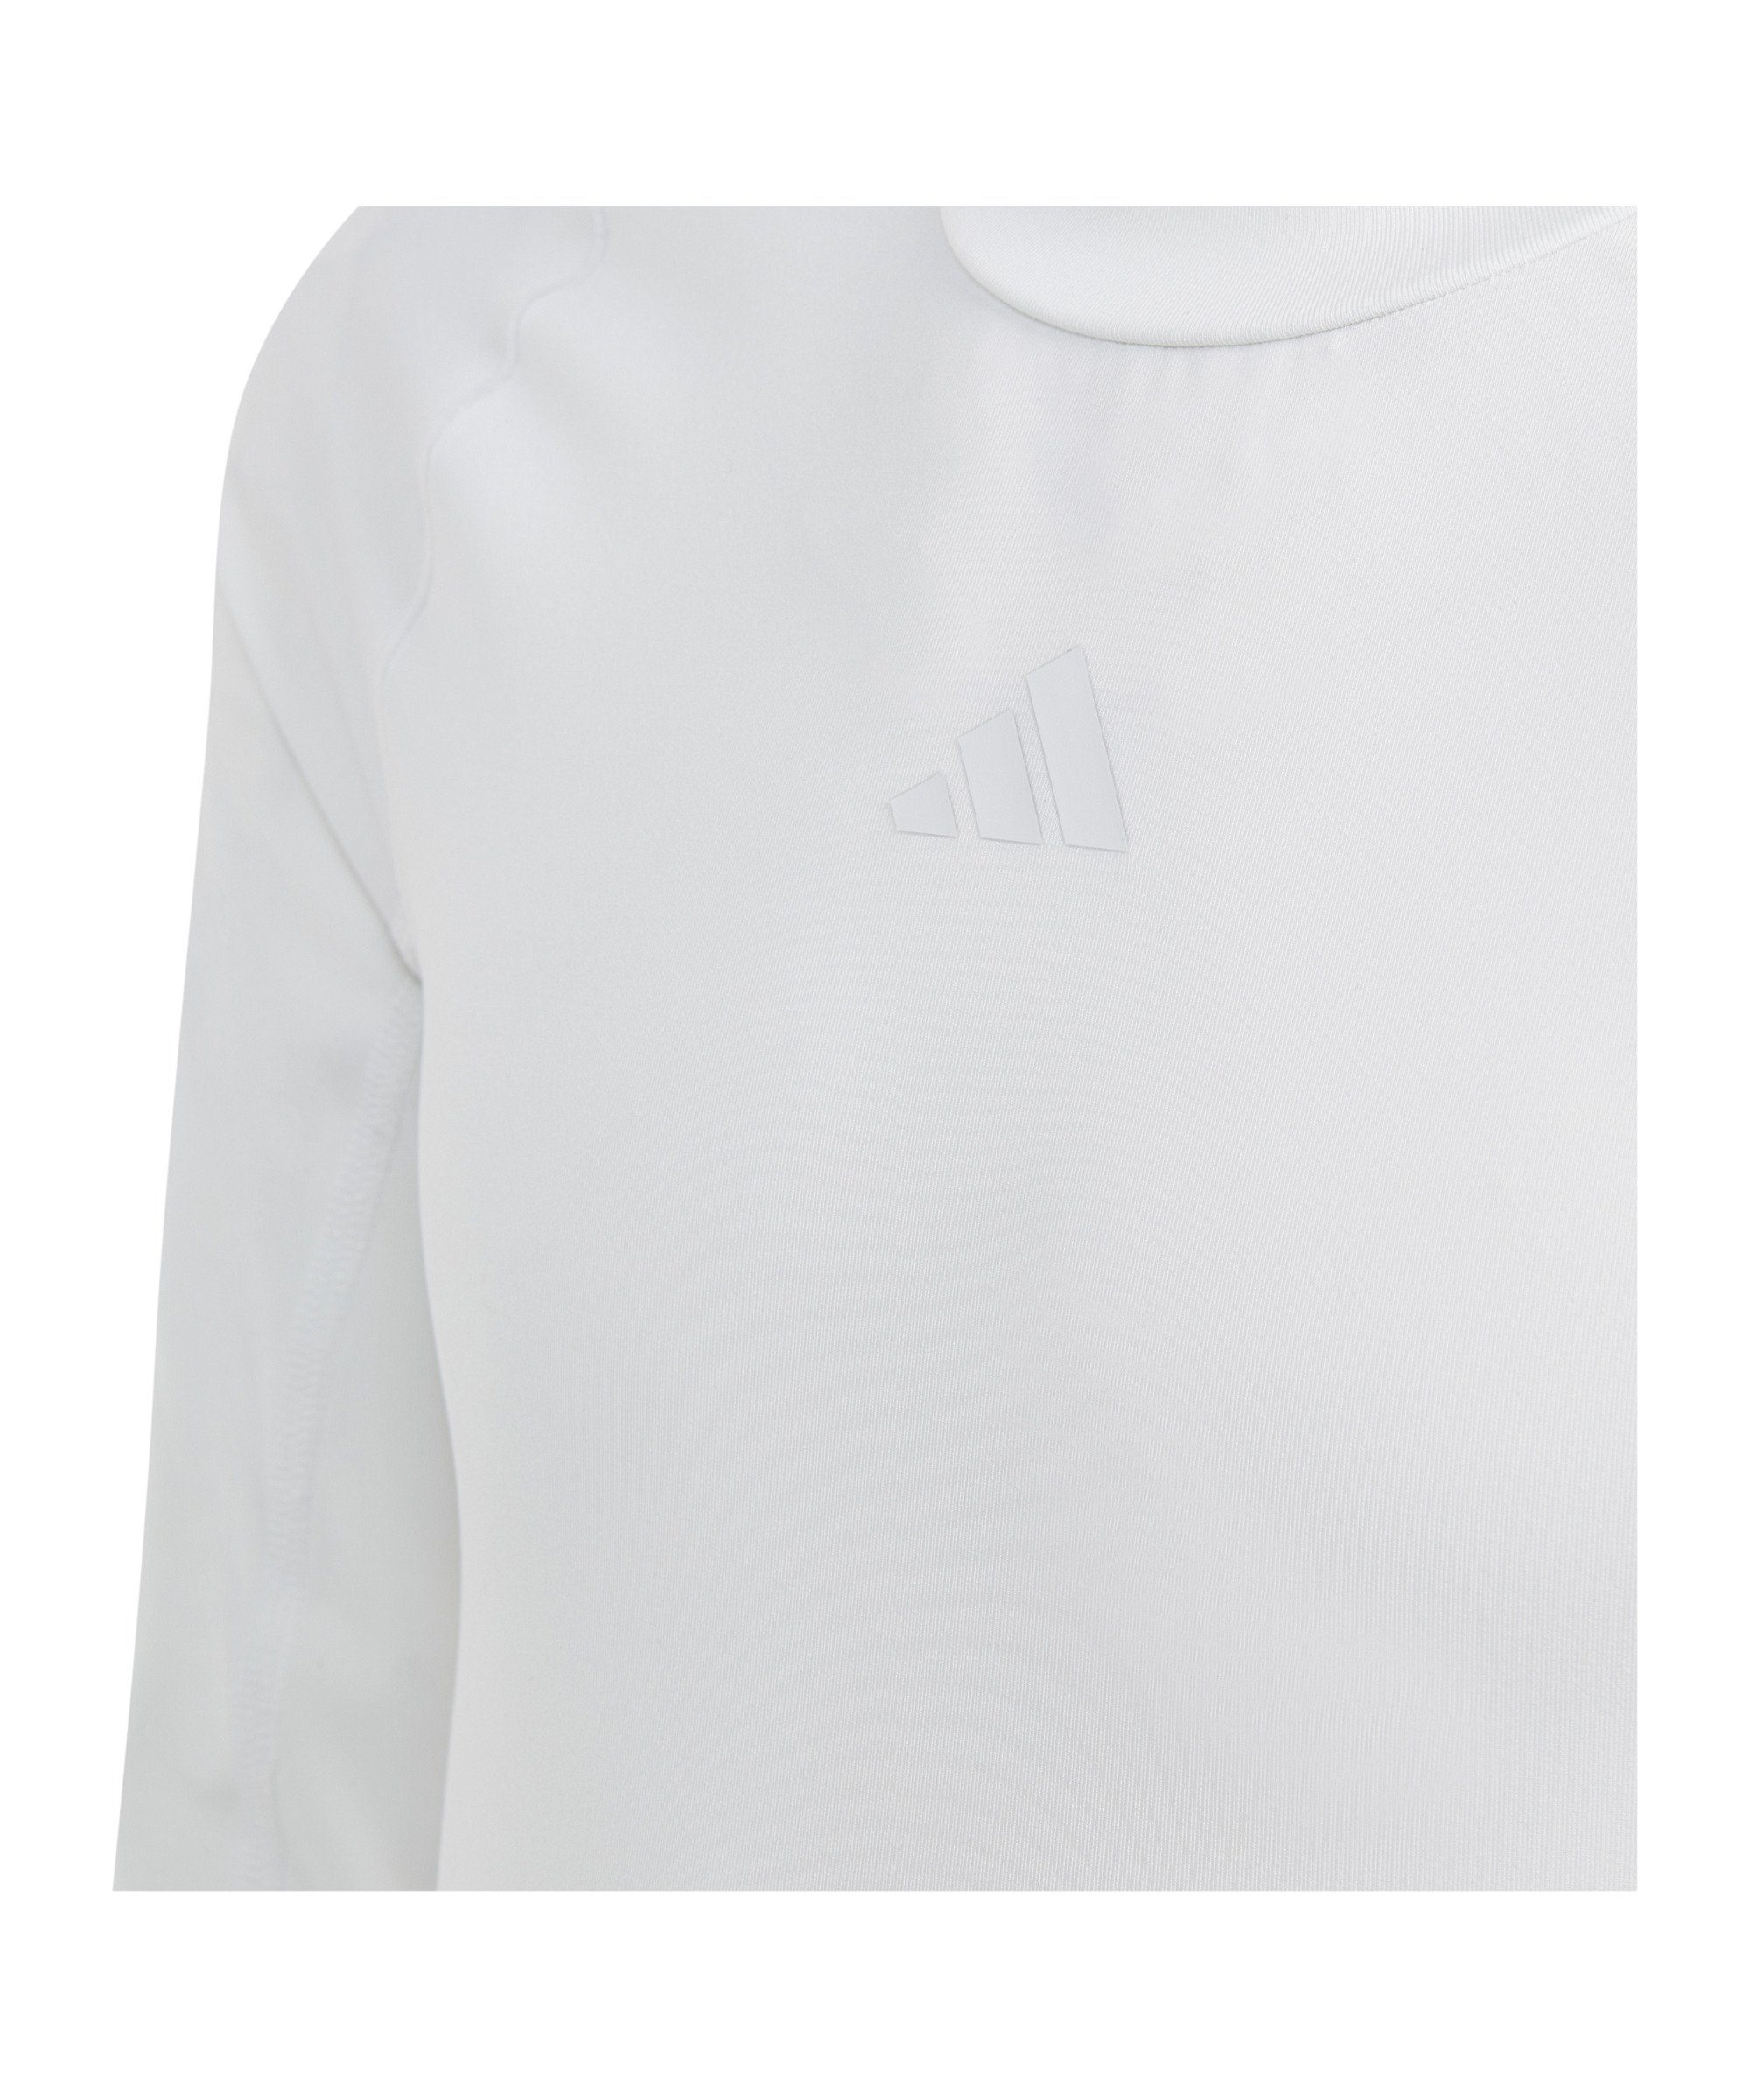 Dunkel weiss adidas Techfit Performance Sweatshirt Sweatshirt